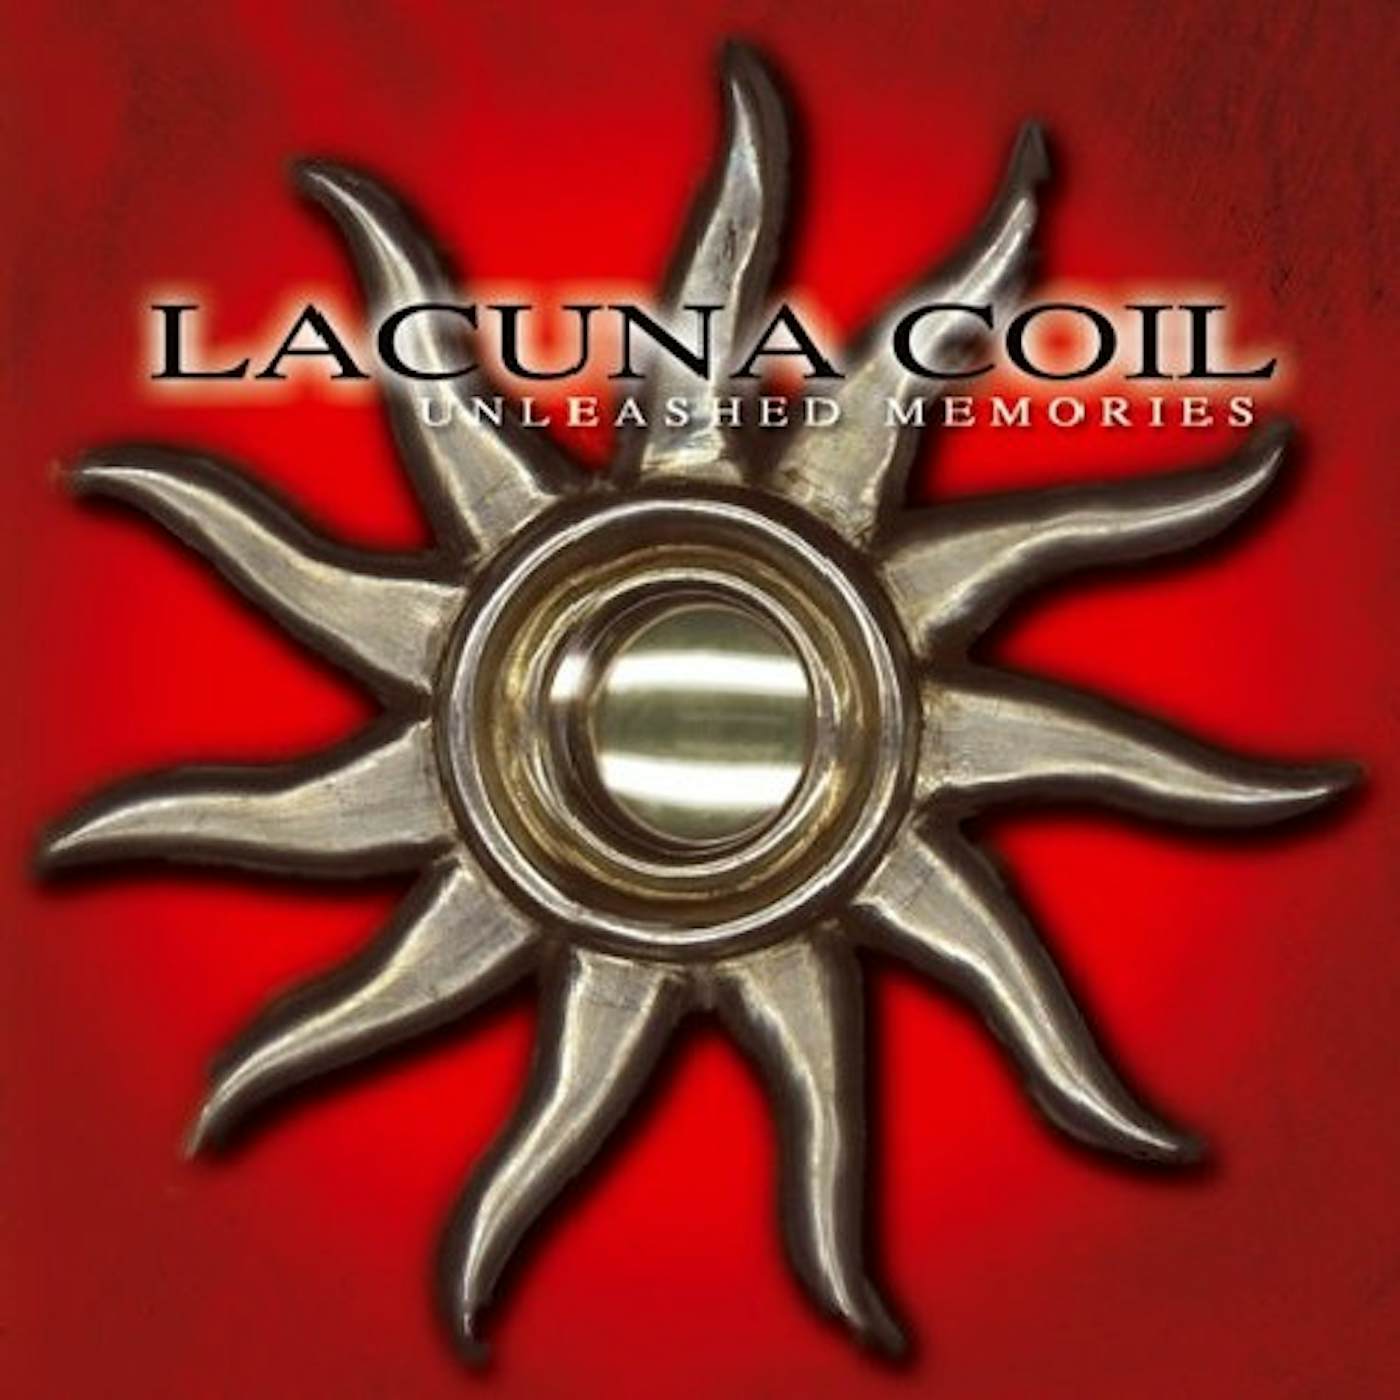 Lacuna Coil Unleashed Memories Vinyl Record